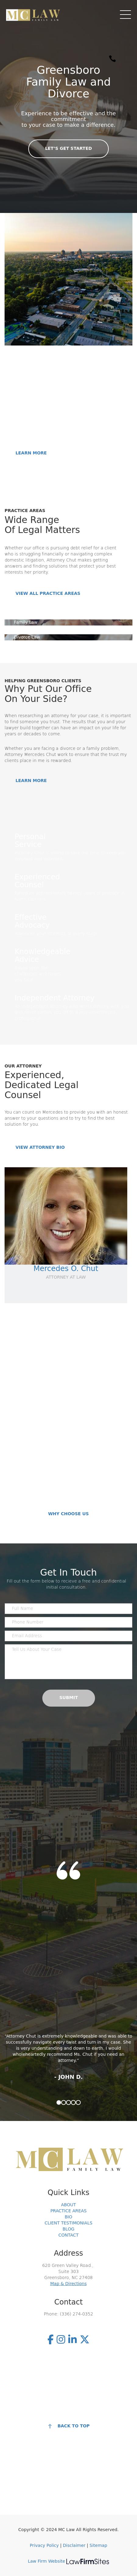 Chut Mercedes O atty - Greensboro NC Lawyers